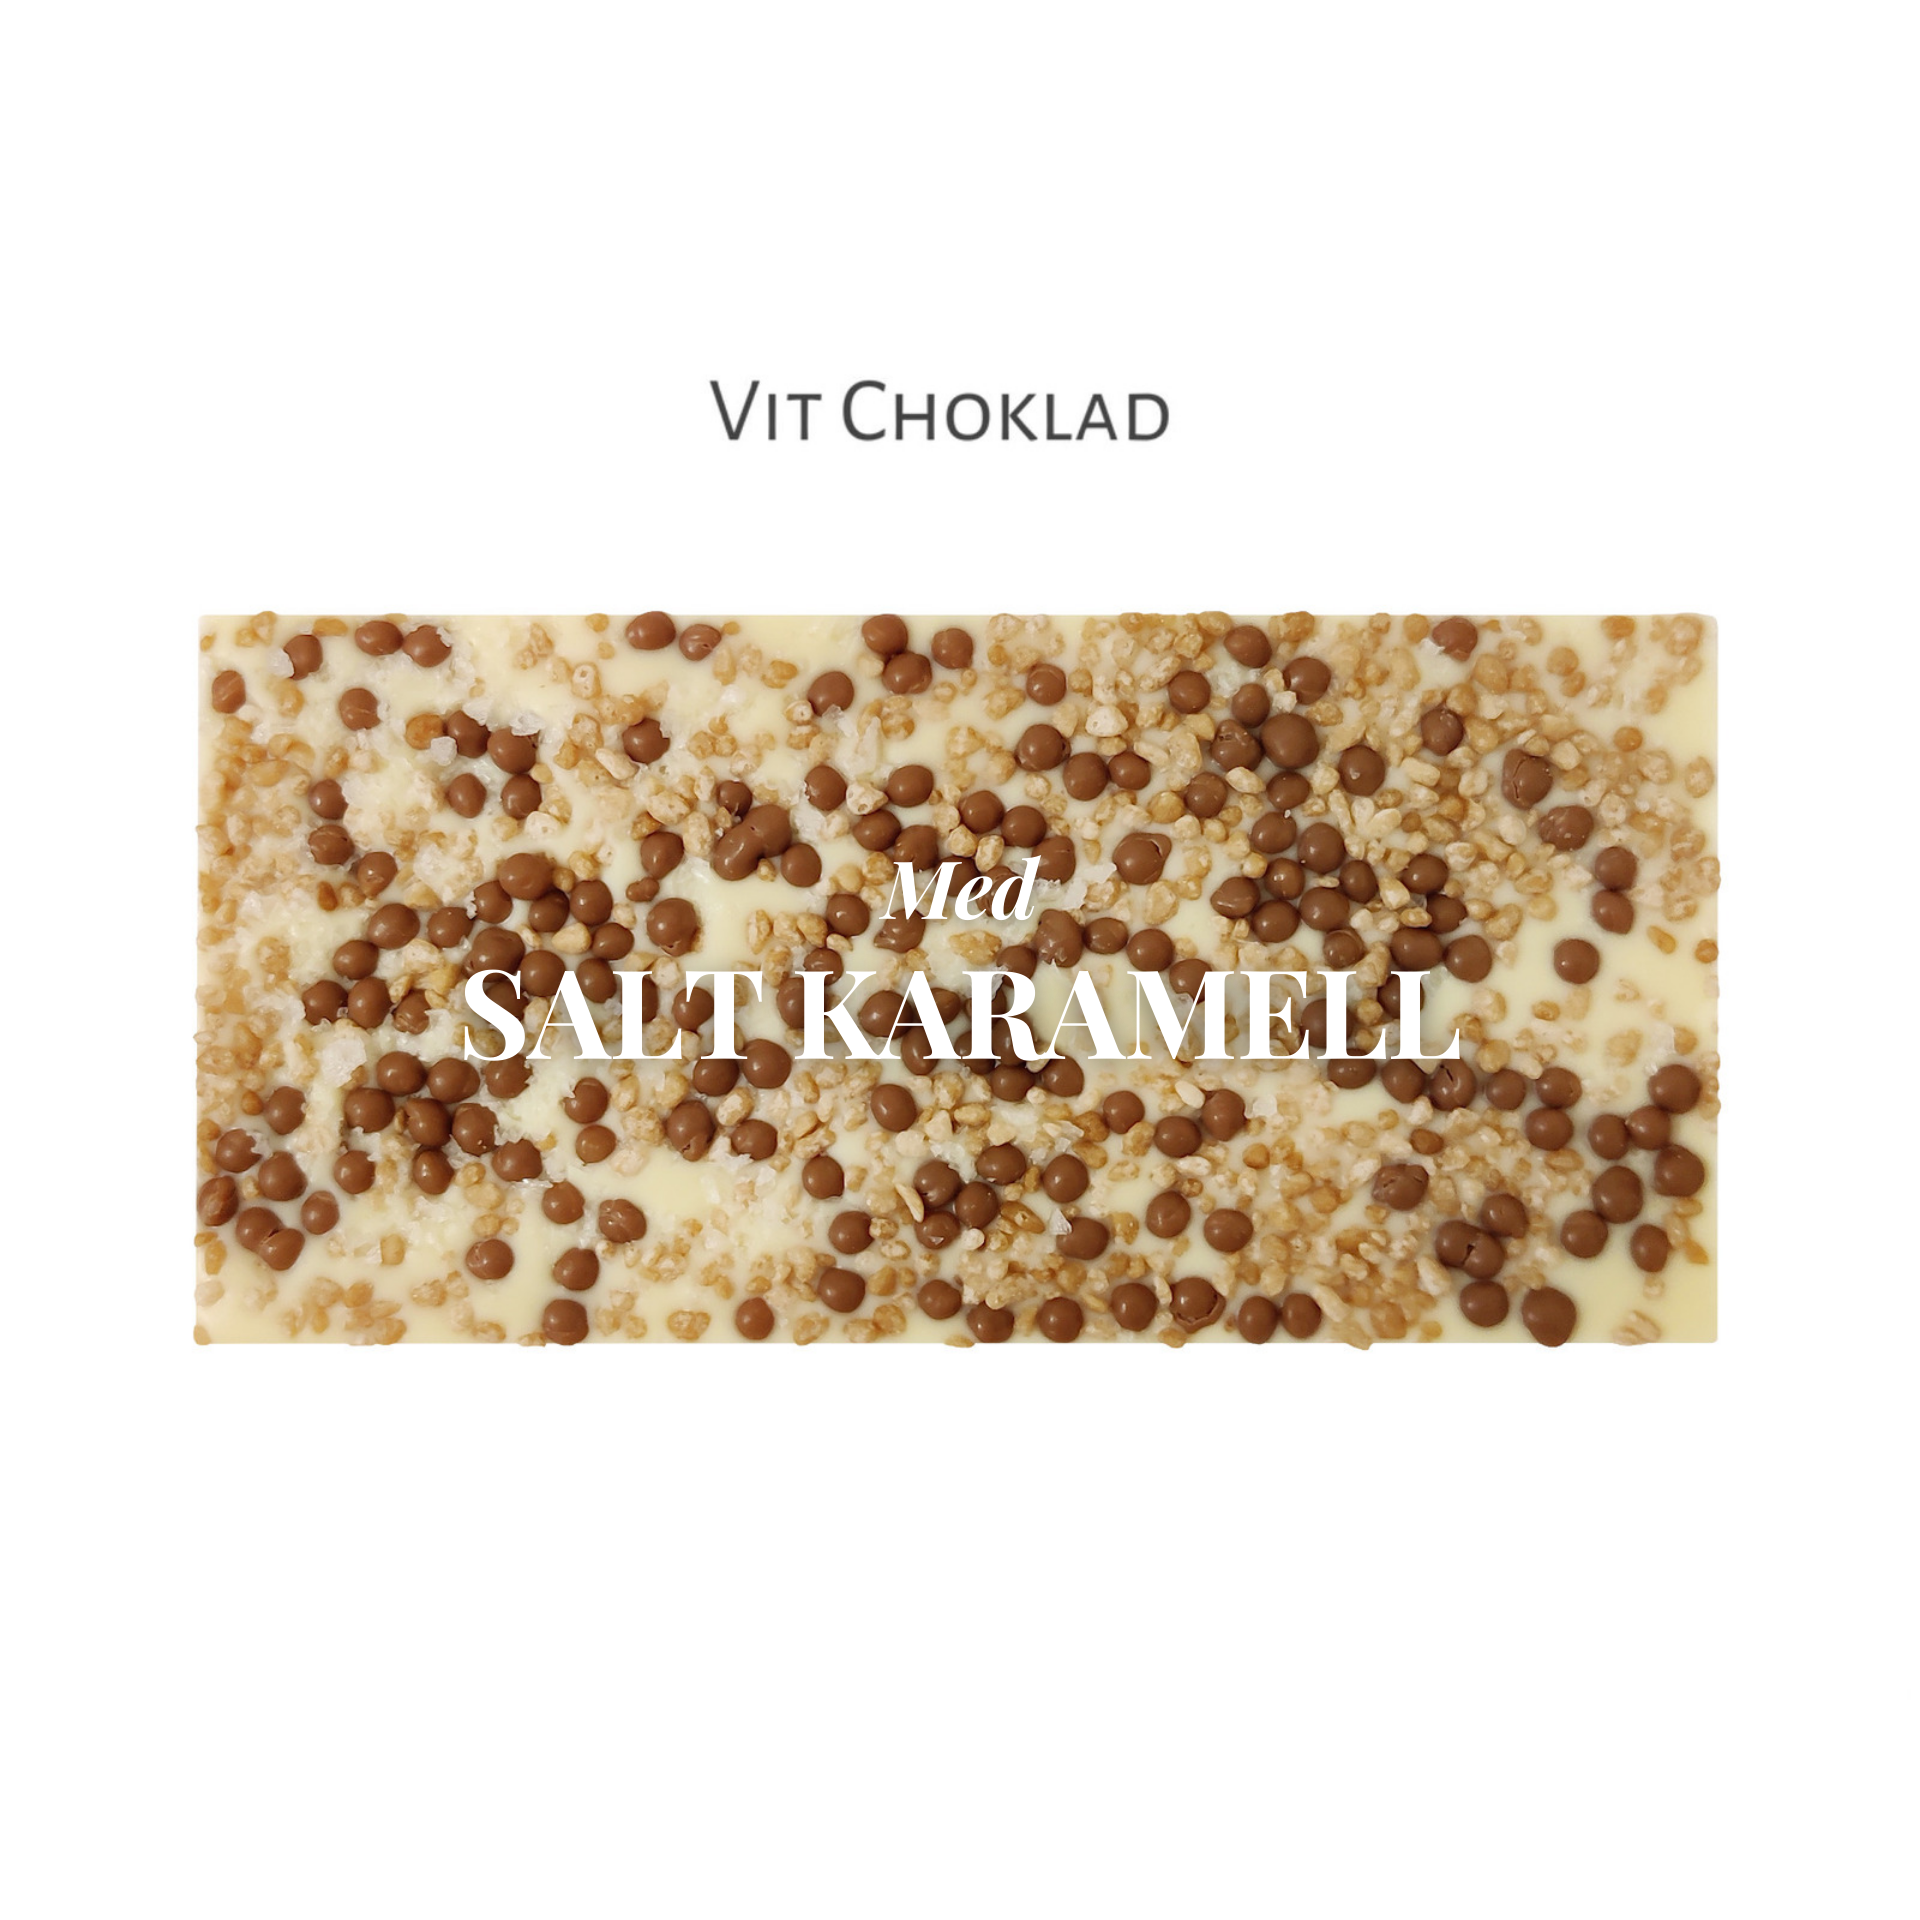 Pralinhuset - Vit Choklad - Salt Karamell & Krokantkrisp